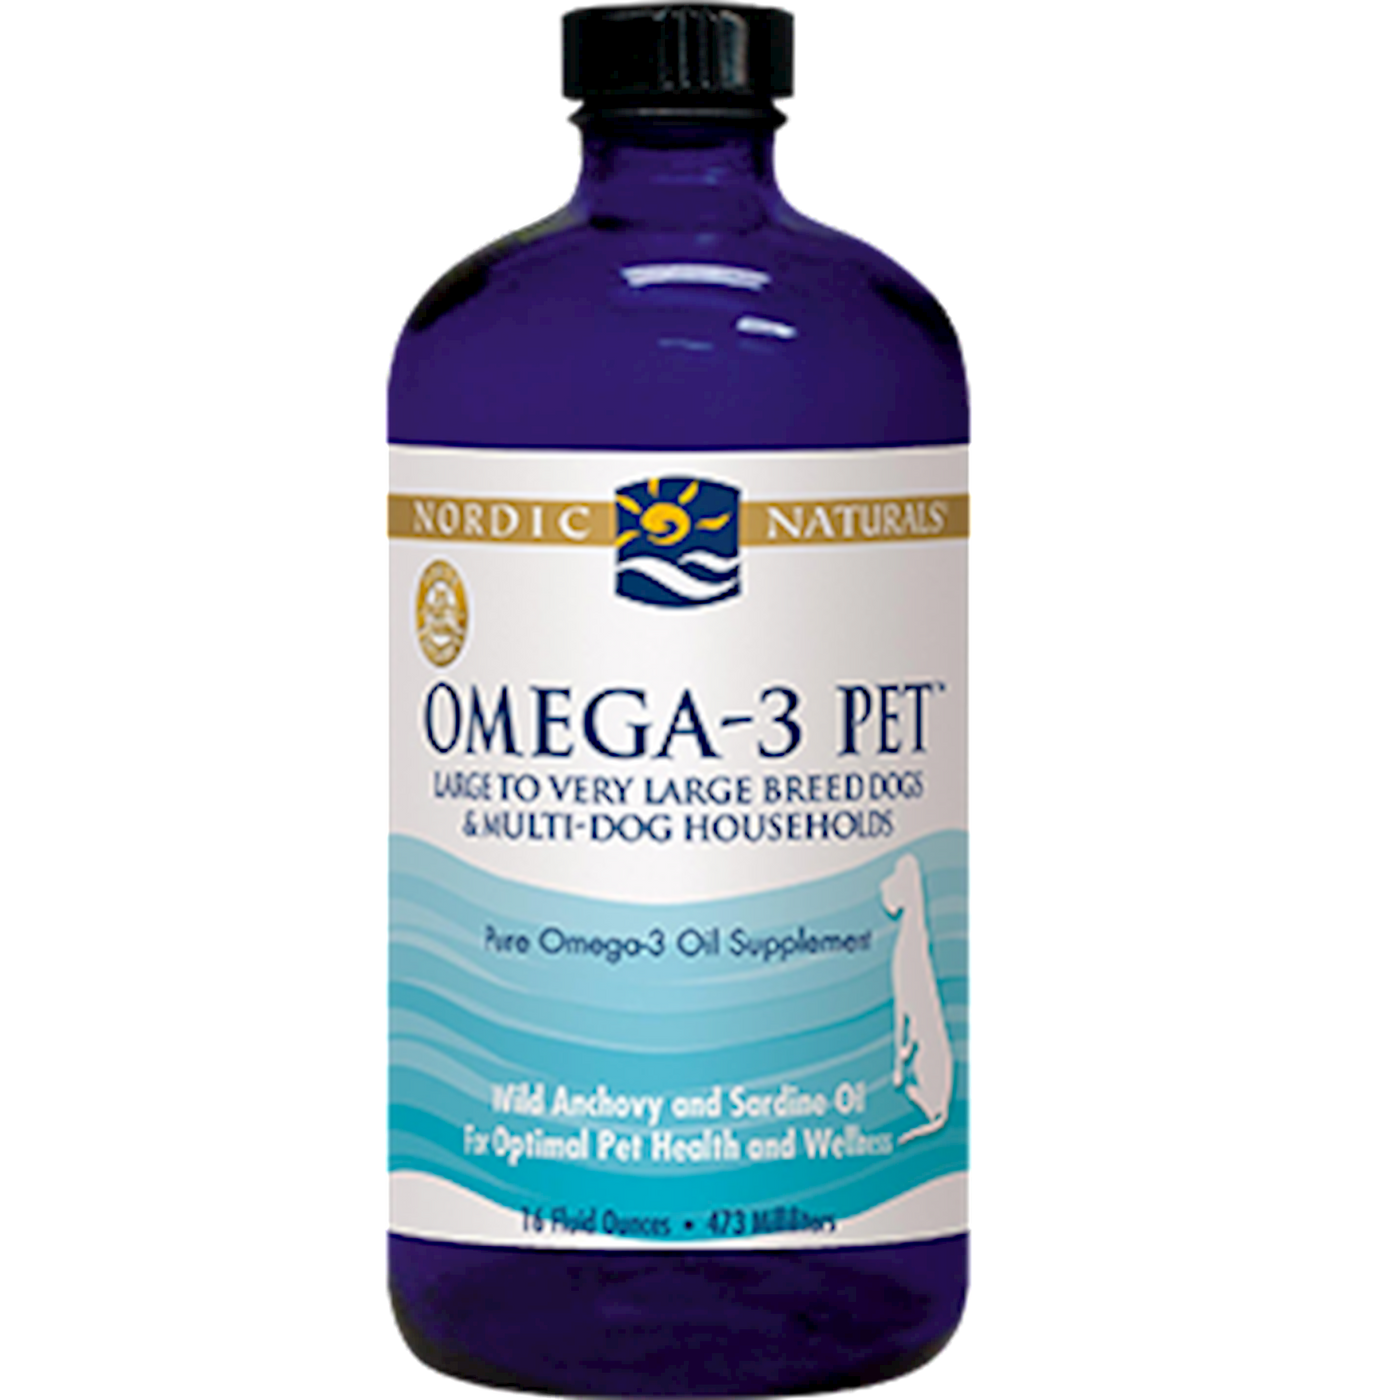 Omega-3 Pet 16 fl oz Curated Wellness